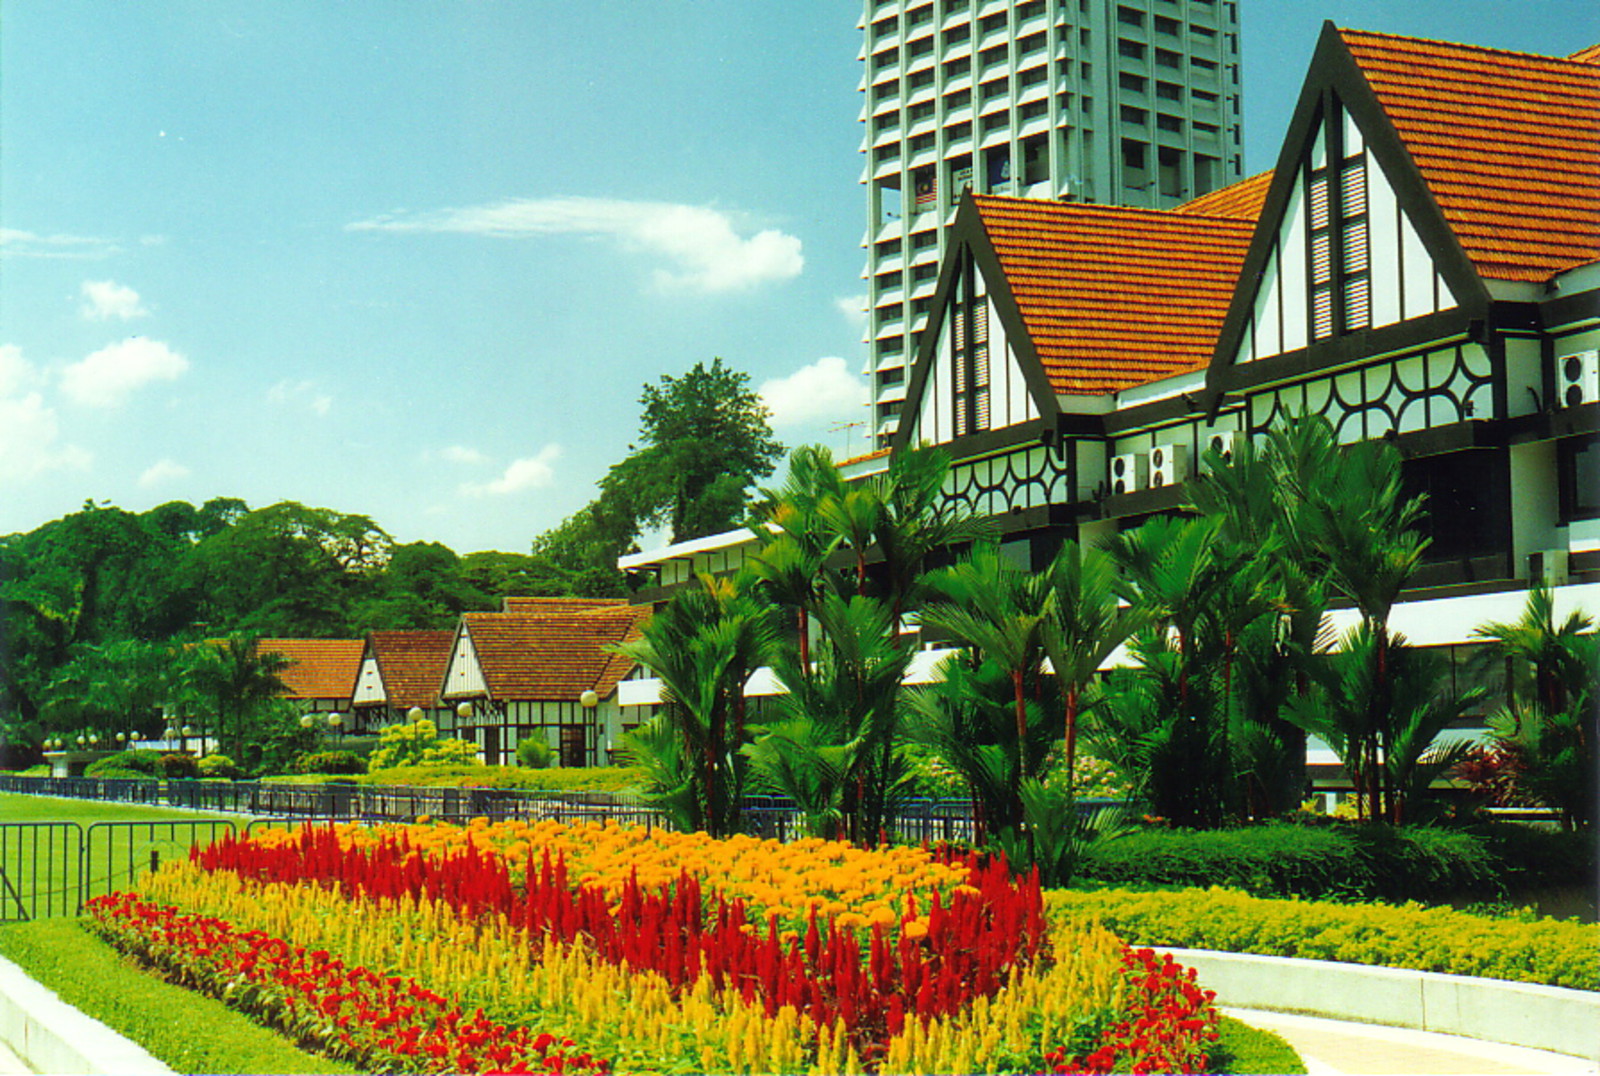 The Selangor Club in Merdeka Square